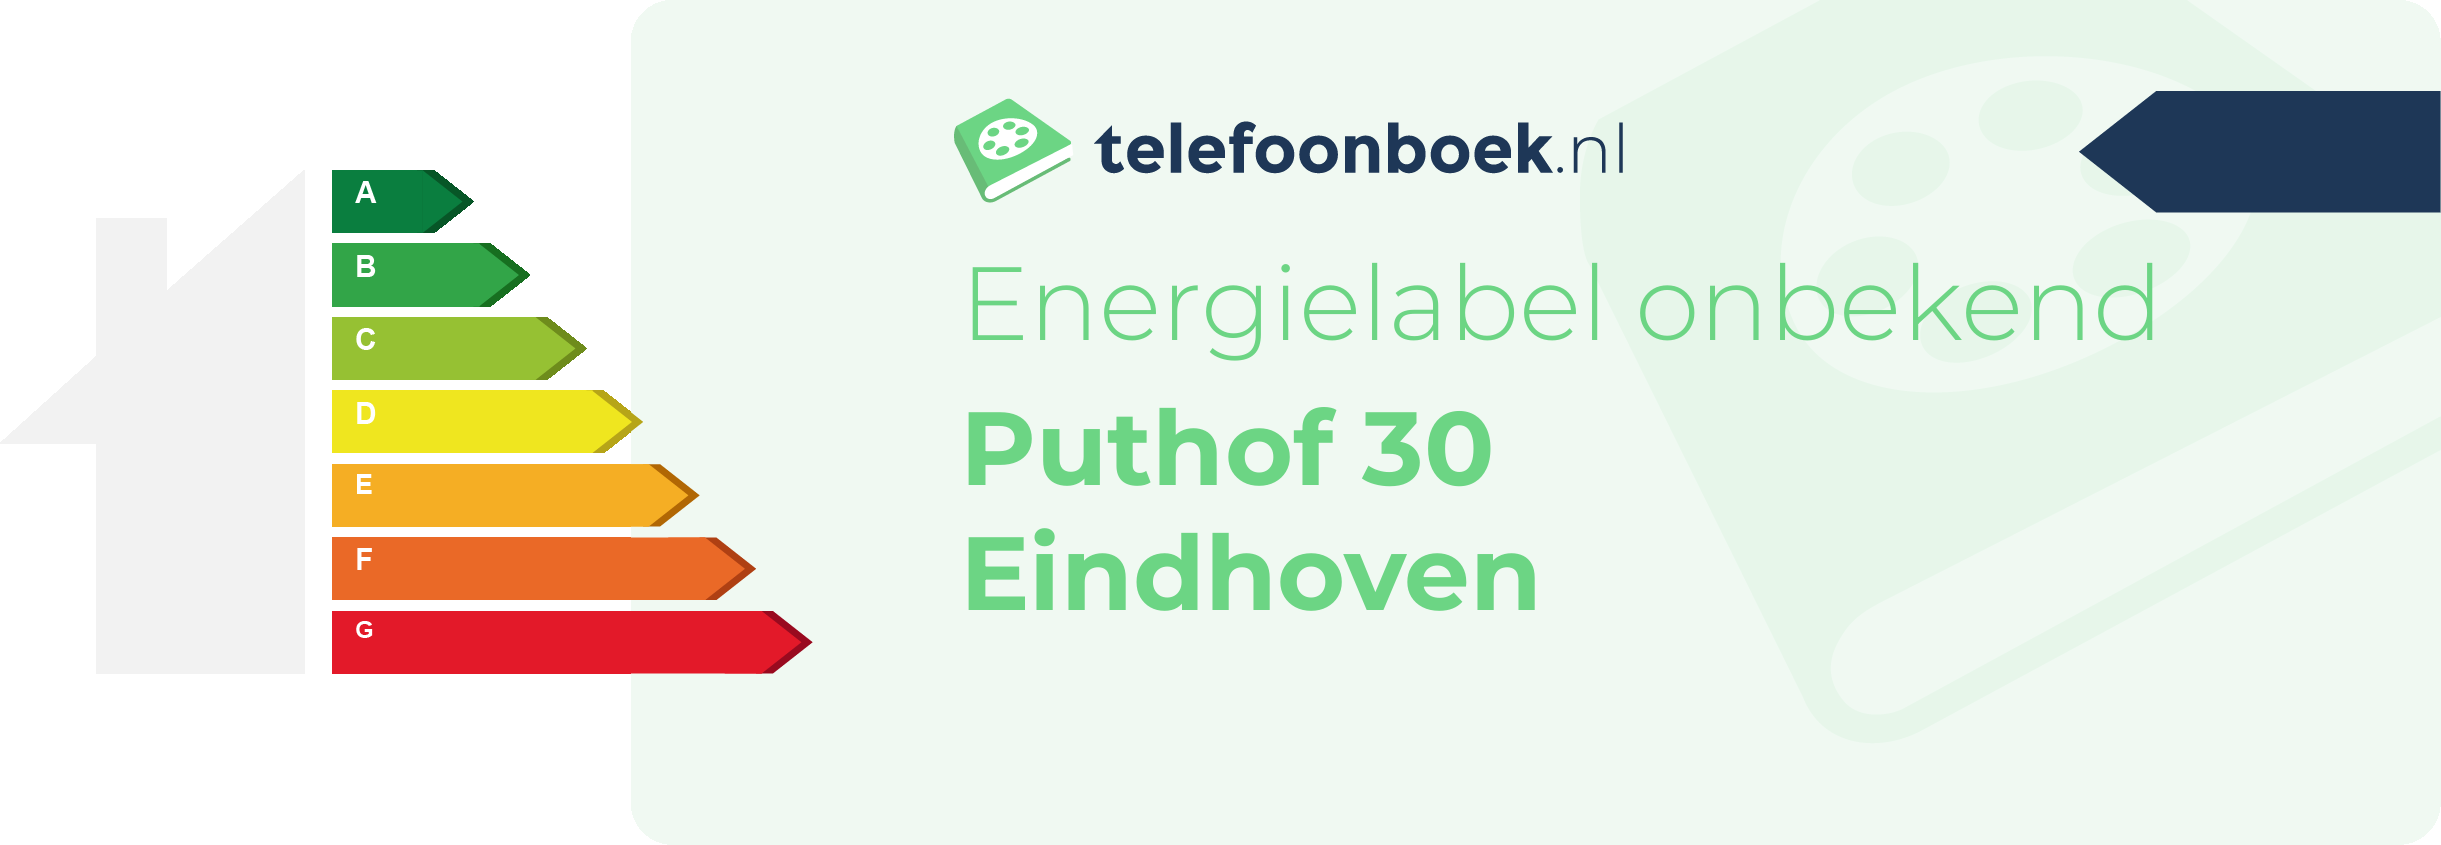 Energielabel Puthof 30 Eindhoven